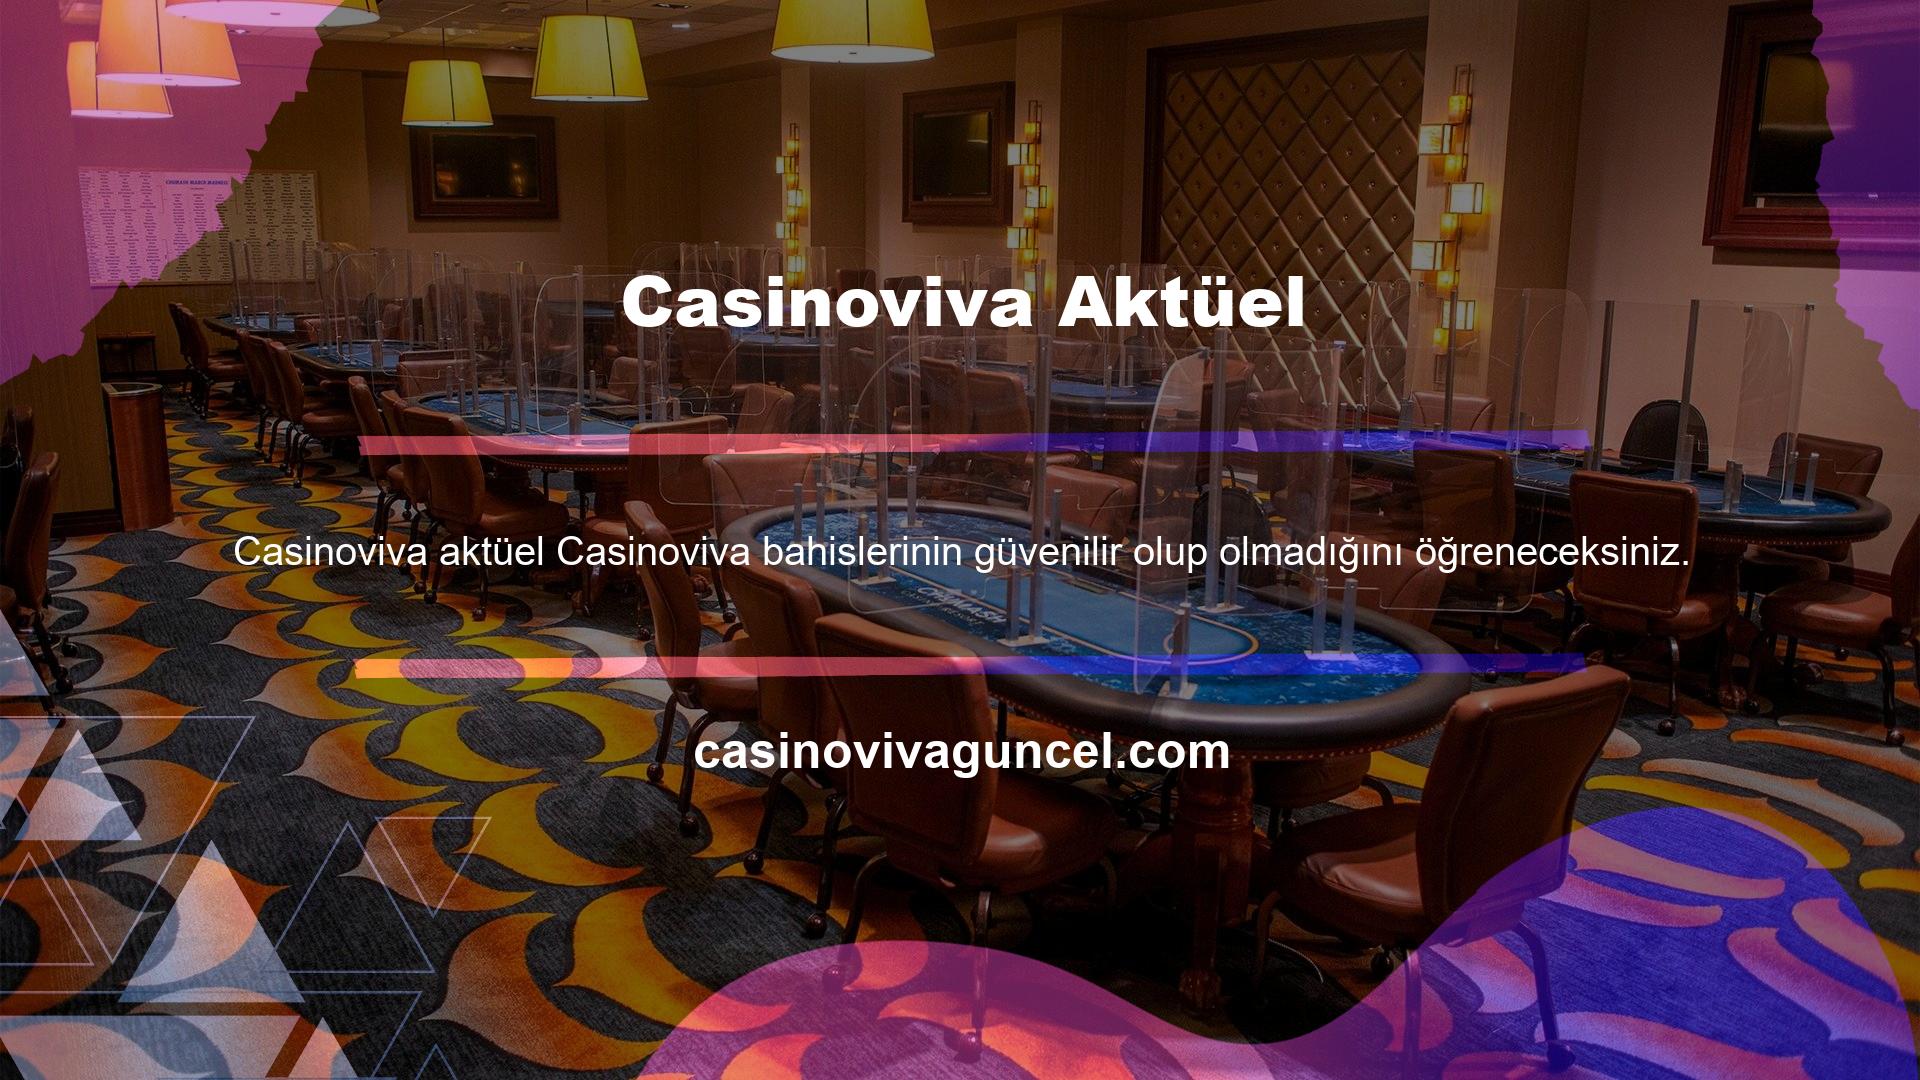 Casinoviva Aktüel